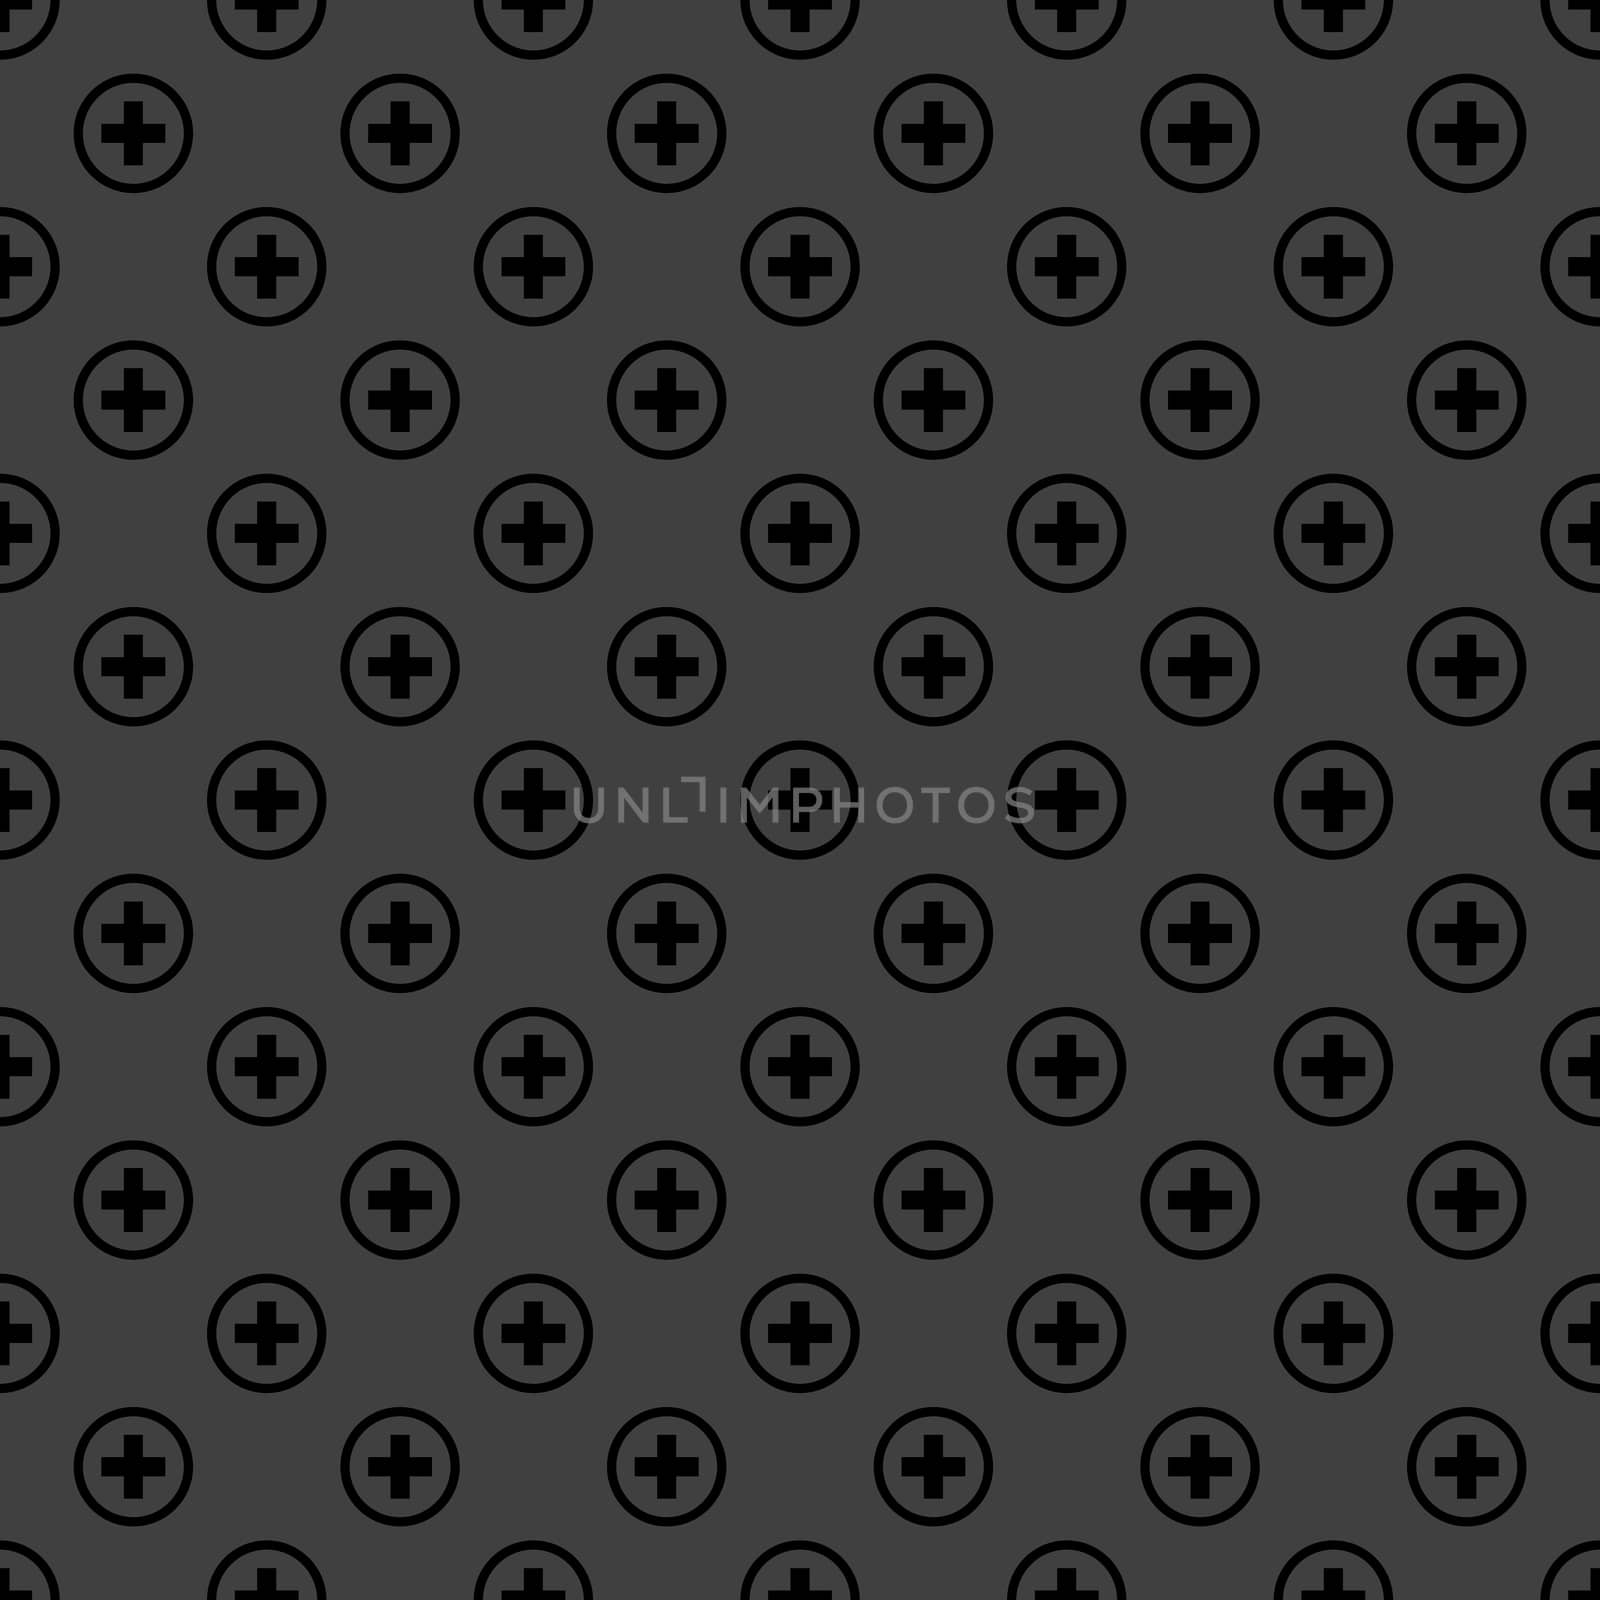 Plus web icon. flat design. Seamless pattern. by serhii_lohvyniuk